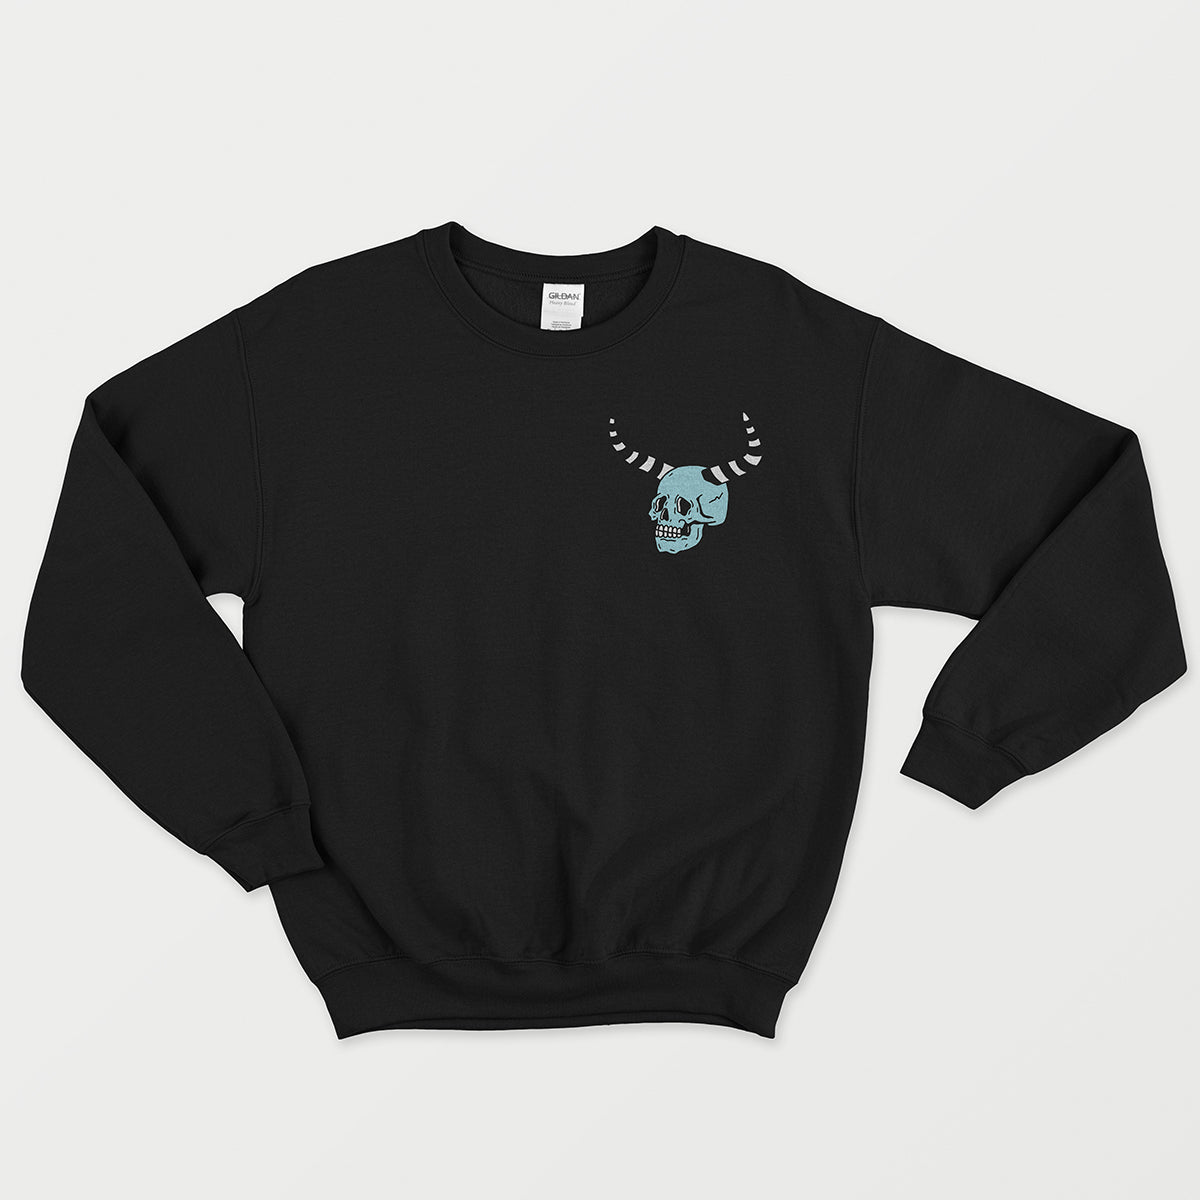 Single Zodiac Personalized Crewneck Sweatshirt - Relatable Basic